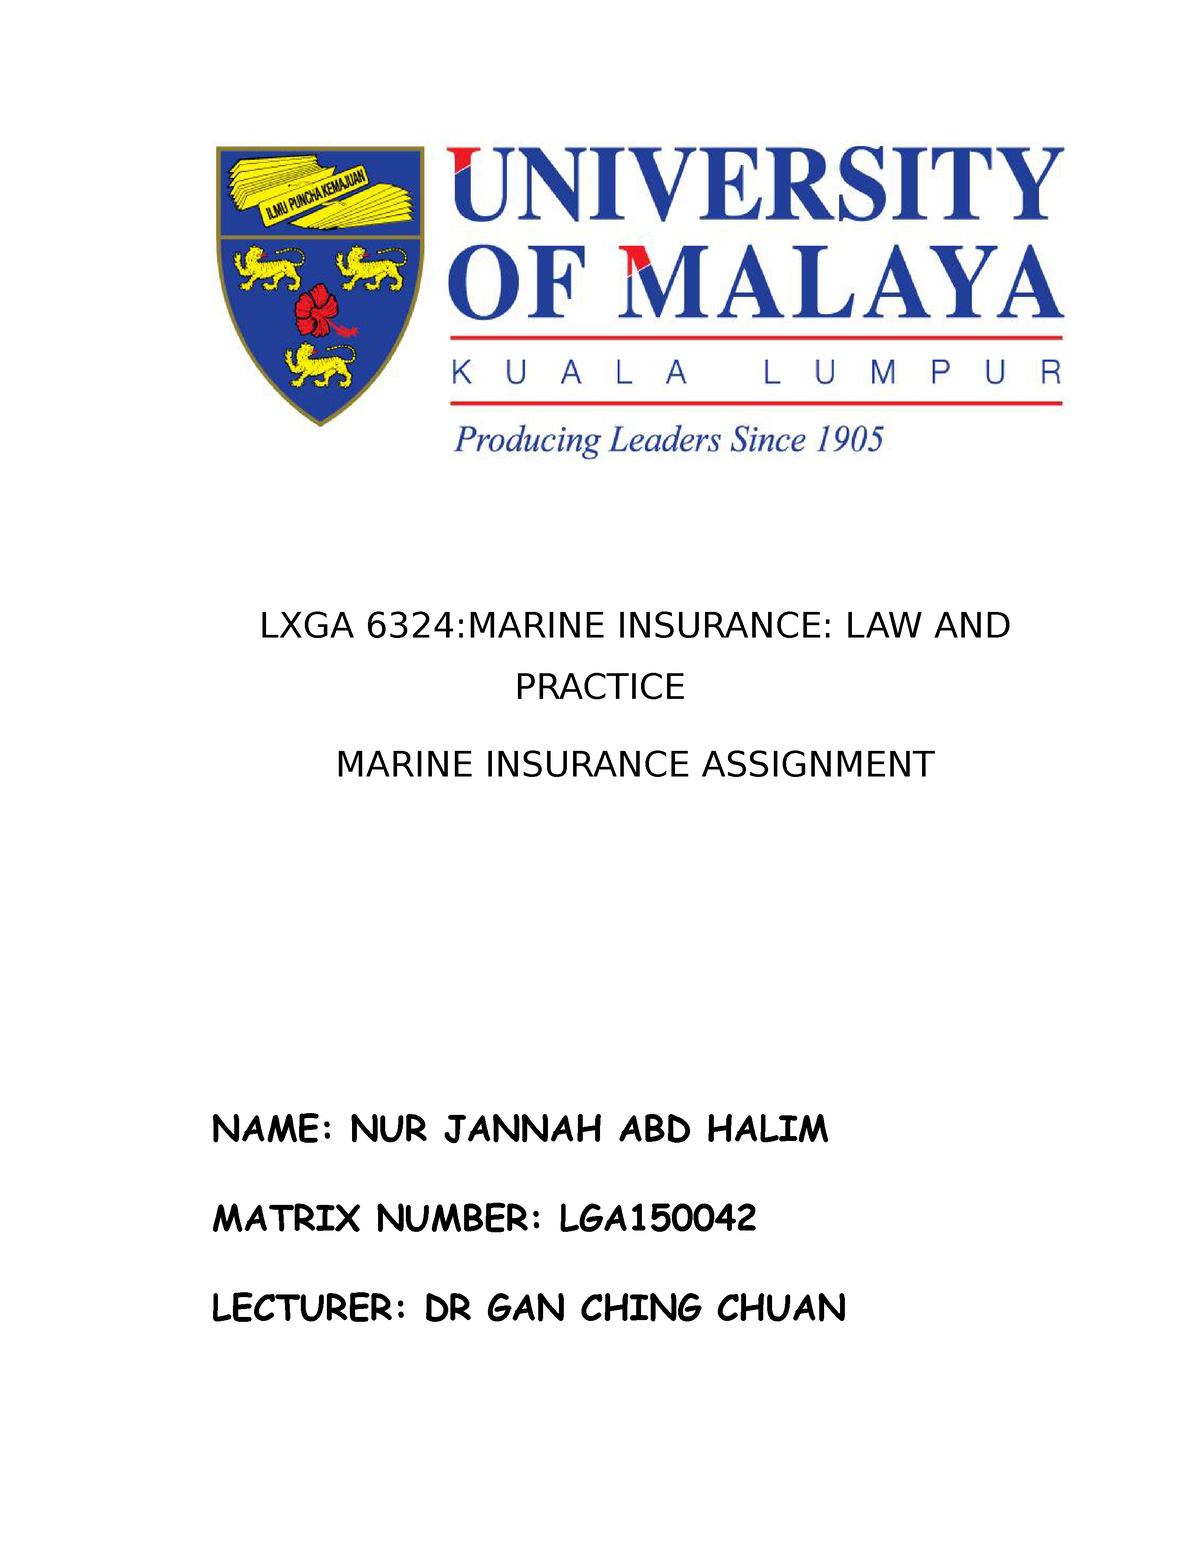 marine insurance assignment